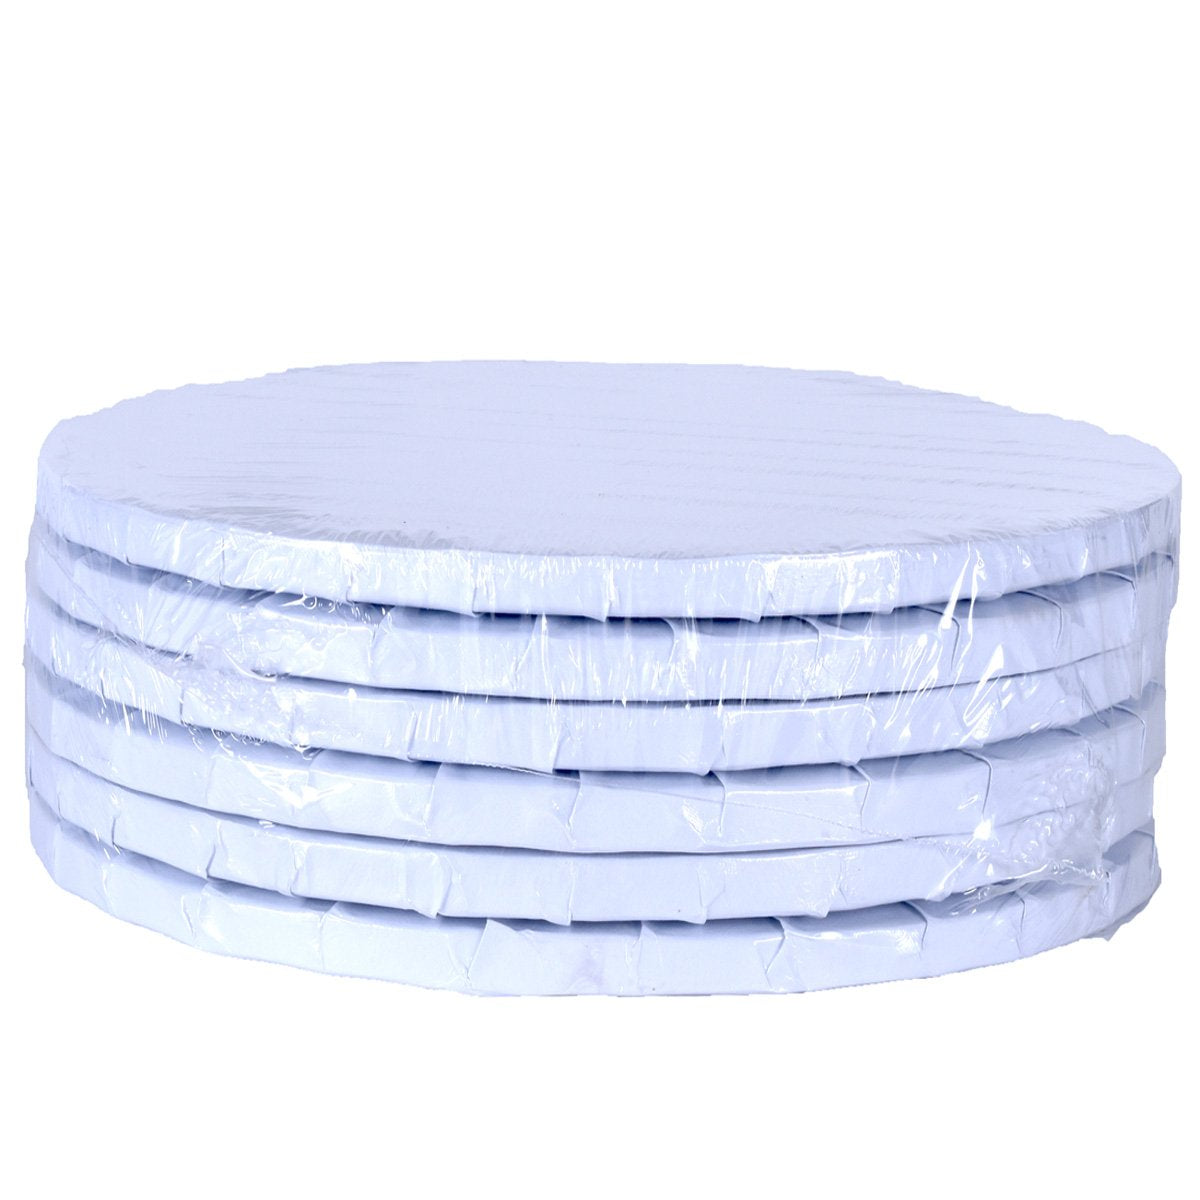 White Circle Cake Drums — All Sizes